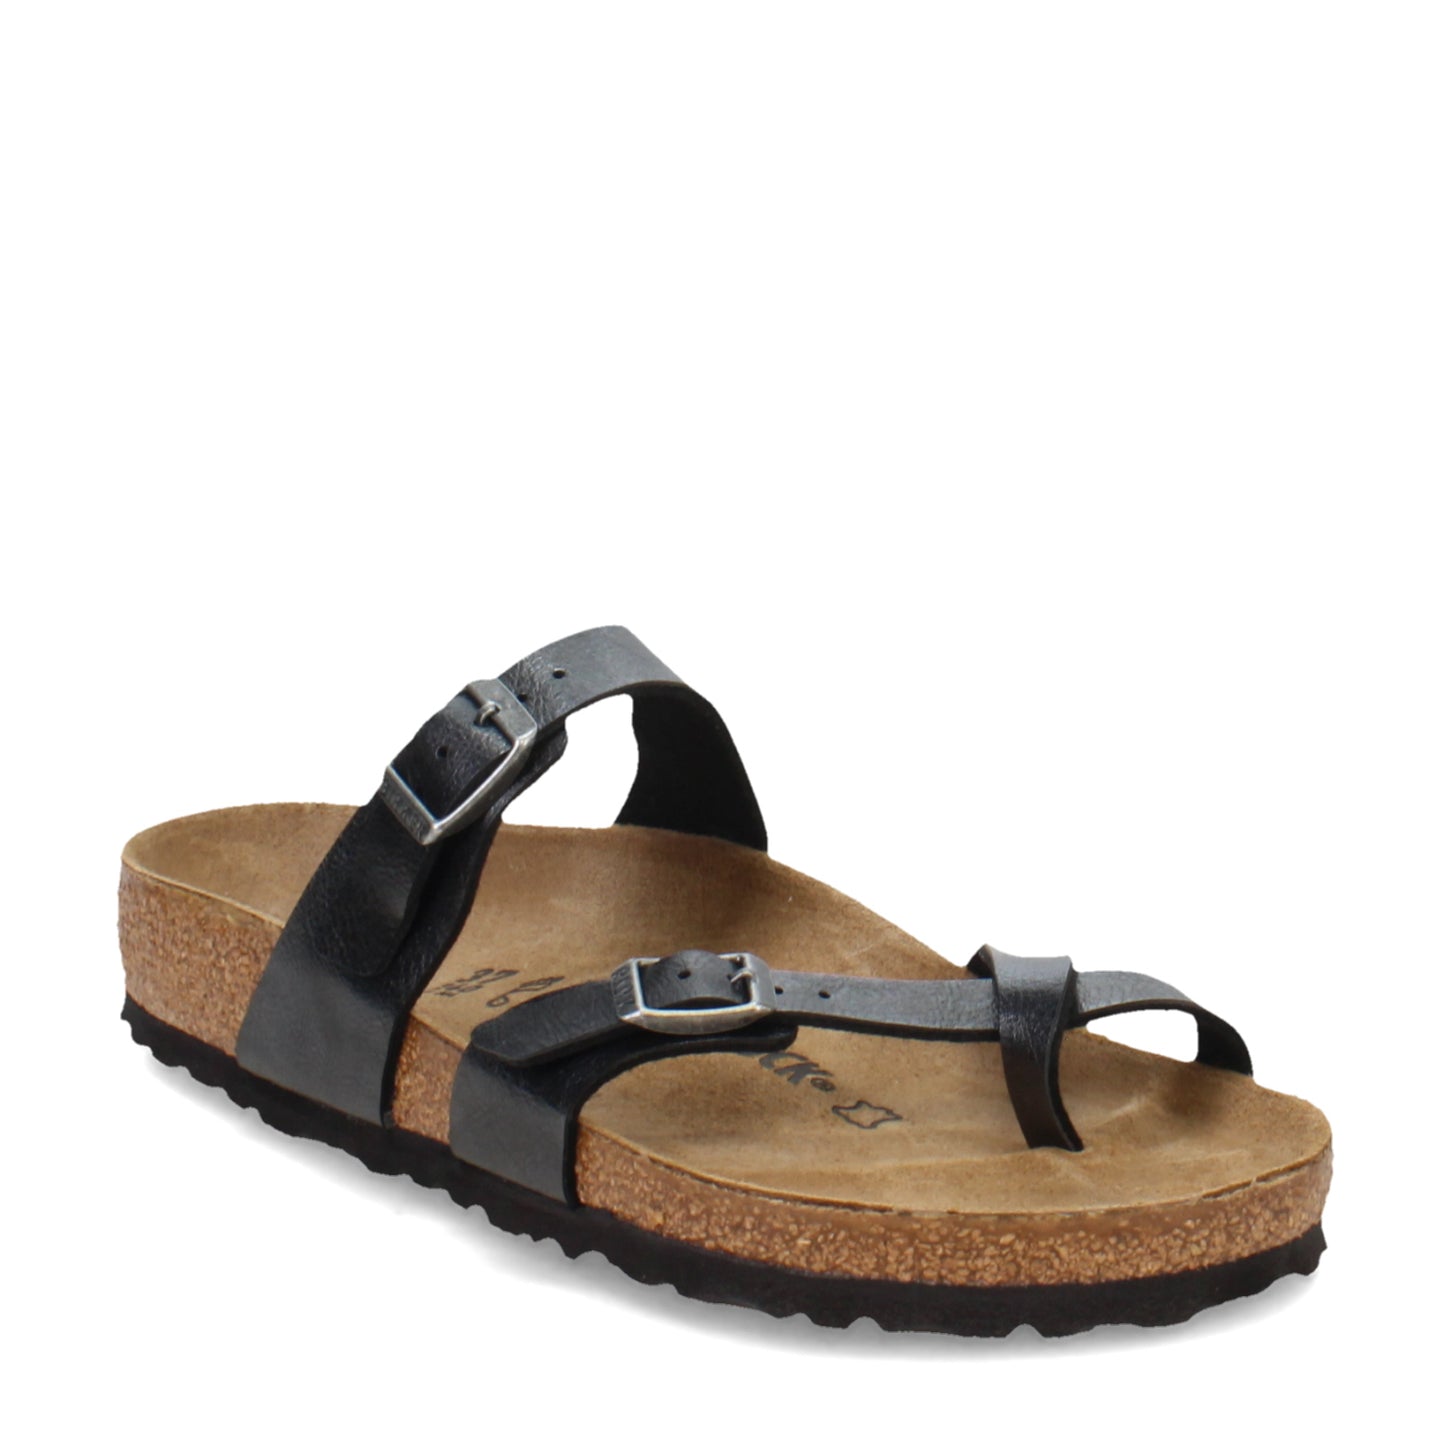 Peltz Shoes  Women's Birkenstock Mayari Thong Sandal - Regular Width LICORICE 17139 1 R